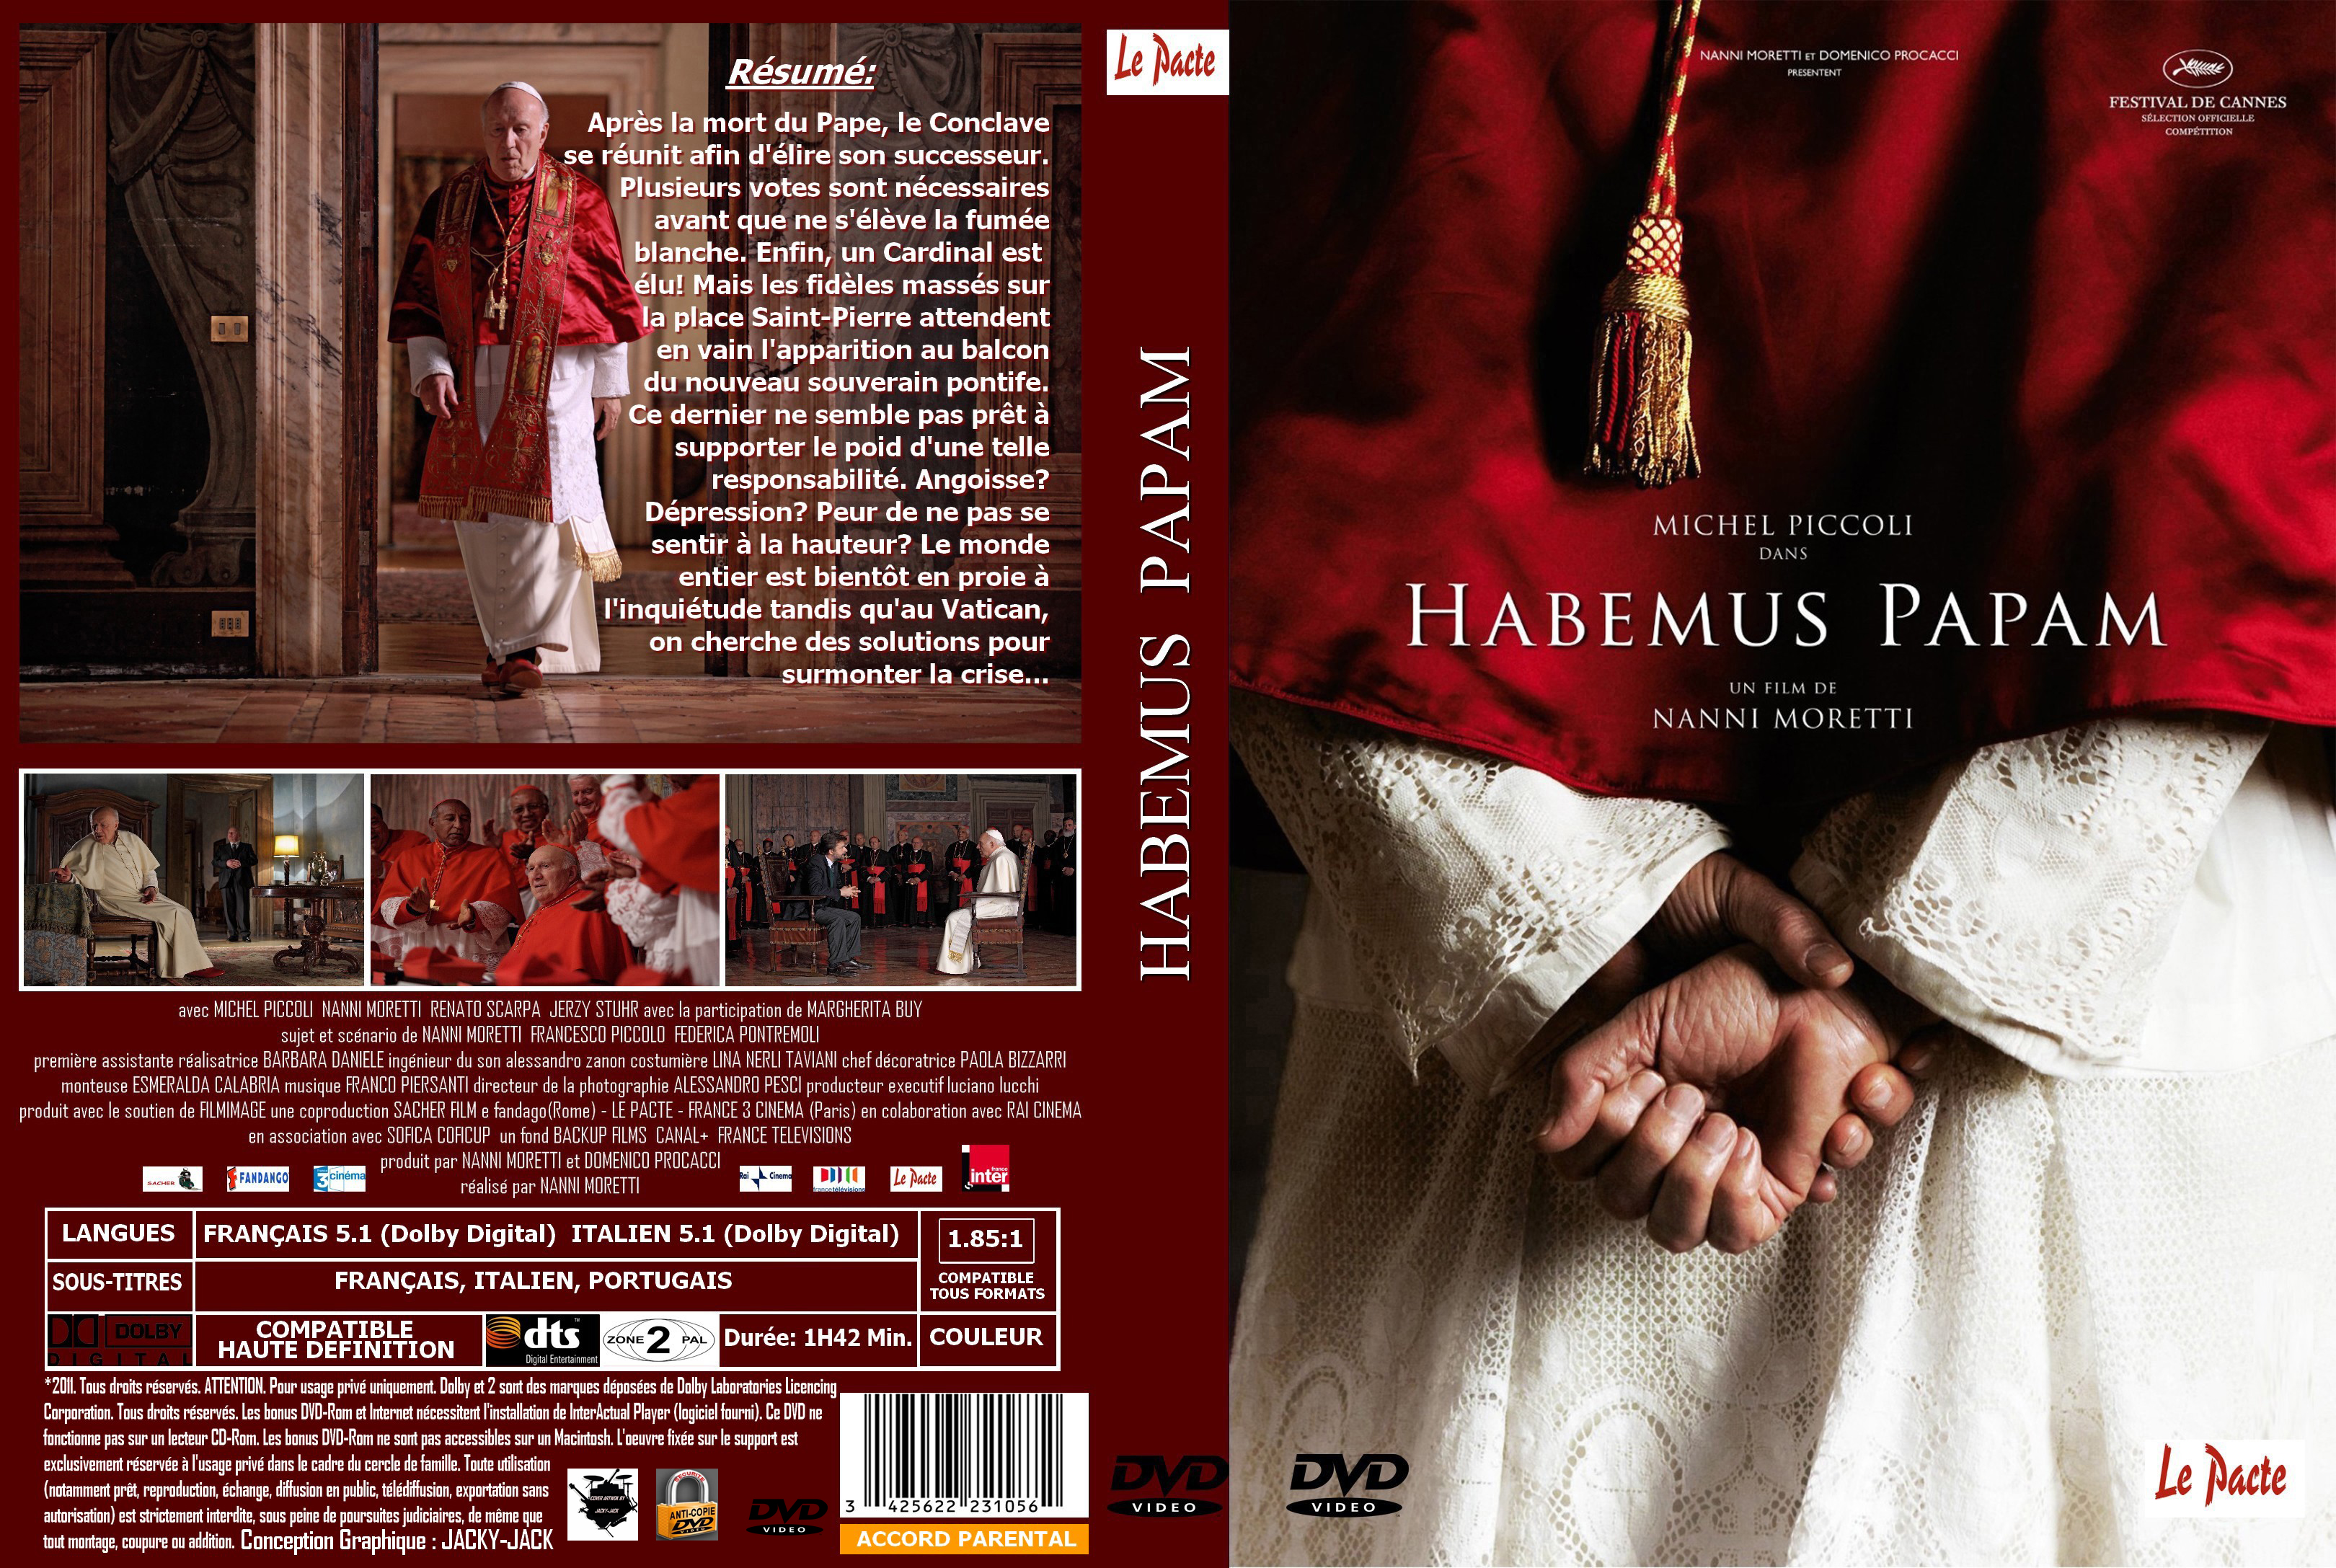 Jaquette DVD Habemus Papam custom